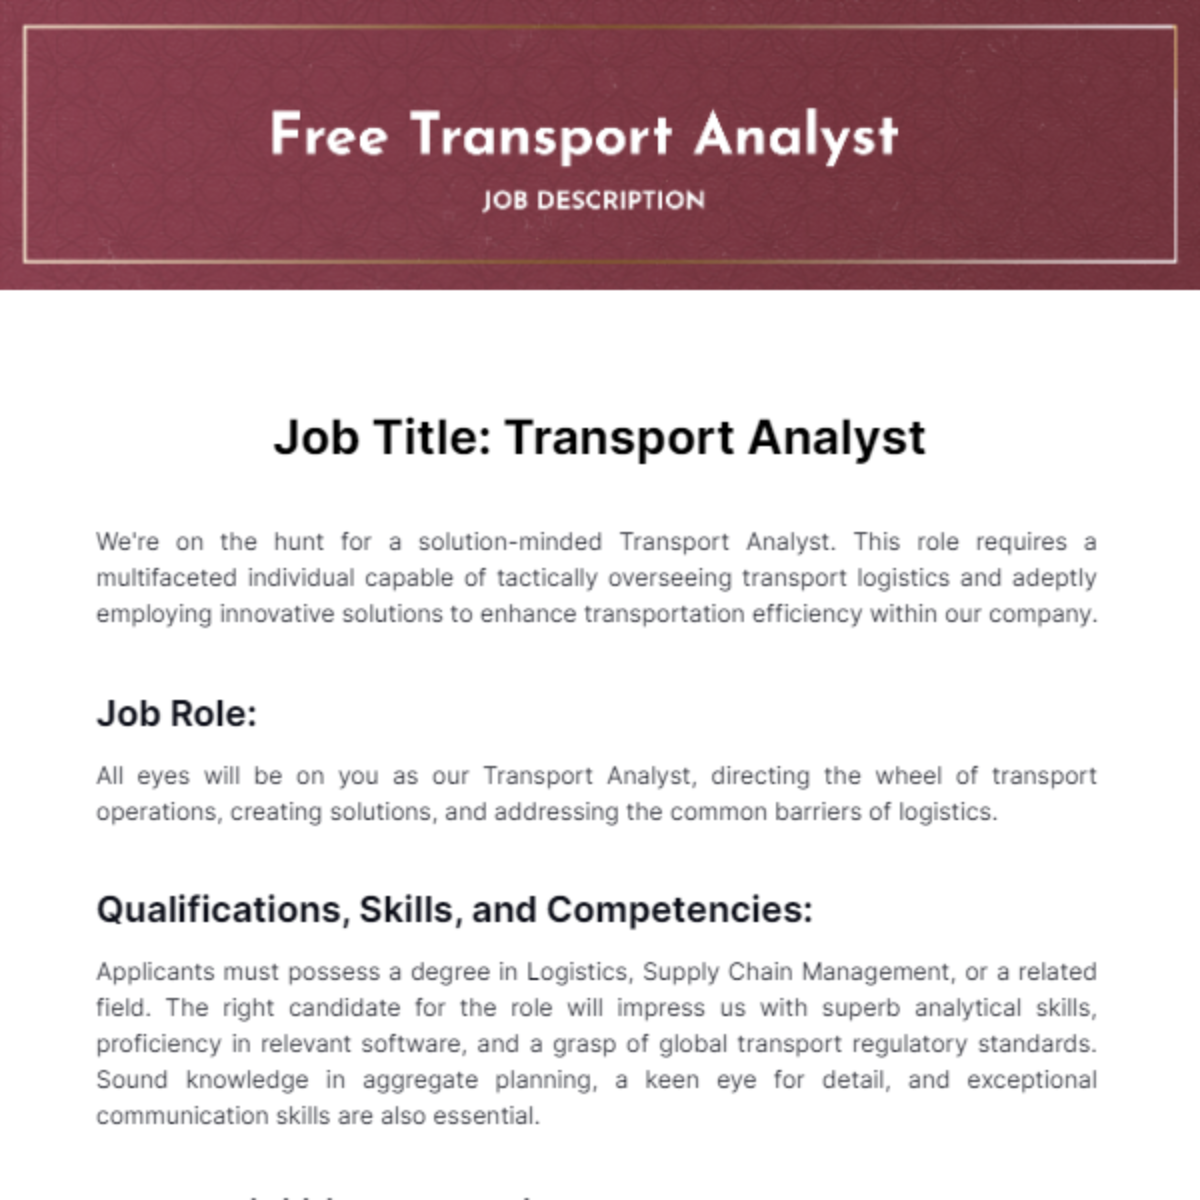 Transport Analyst Job Description Template